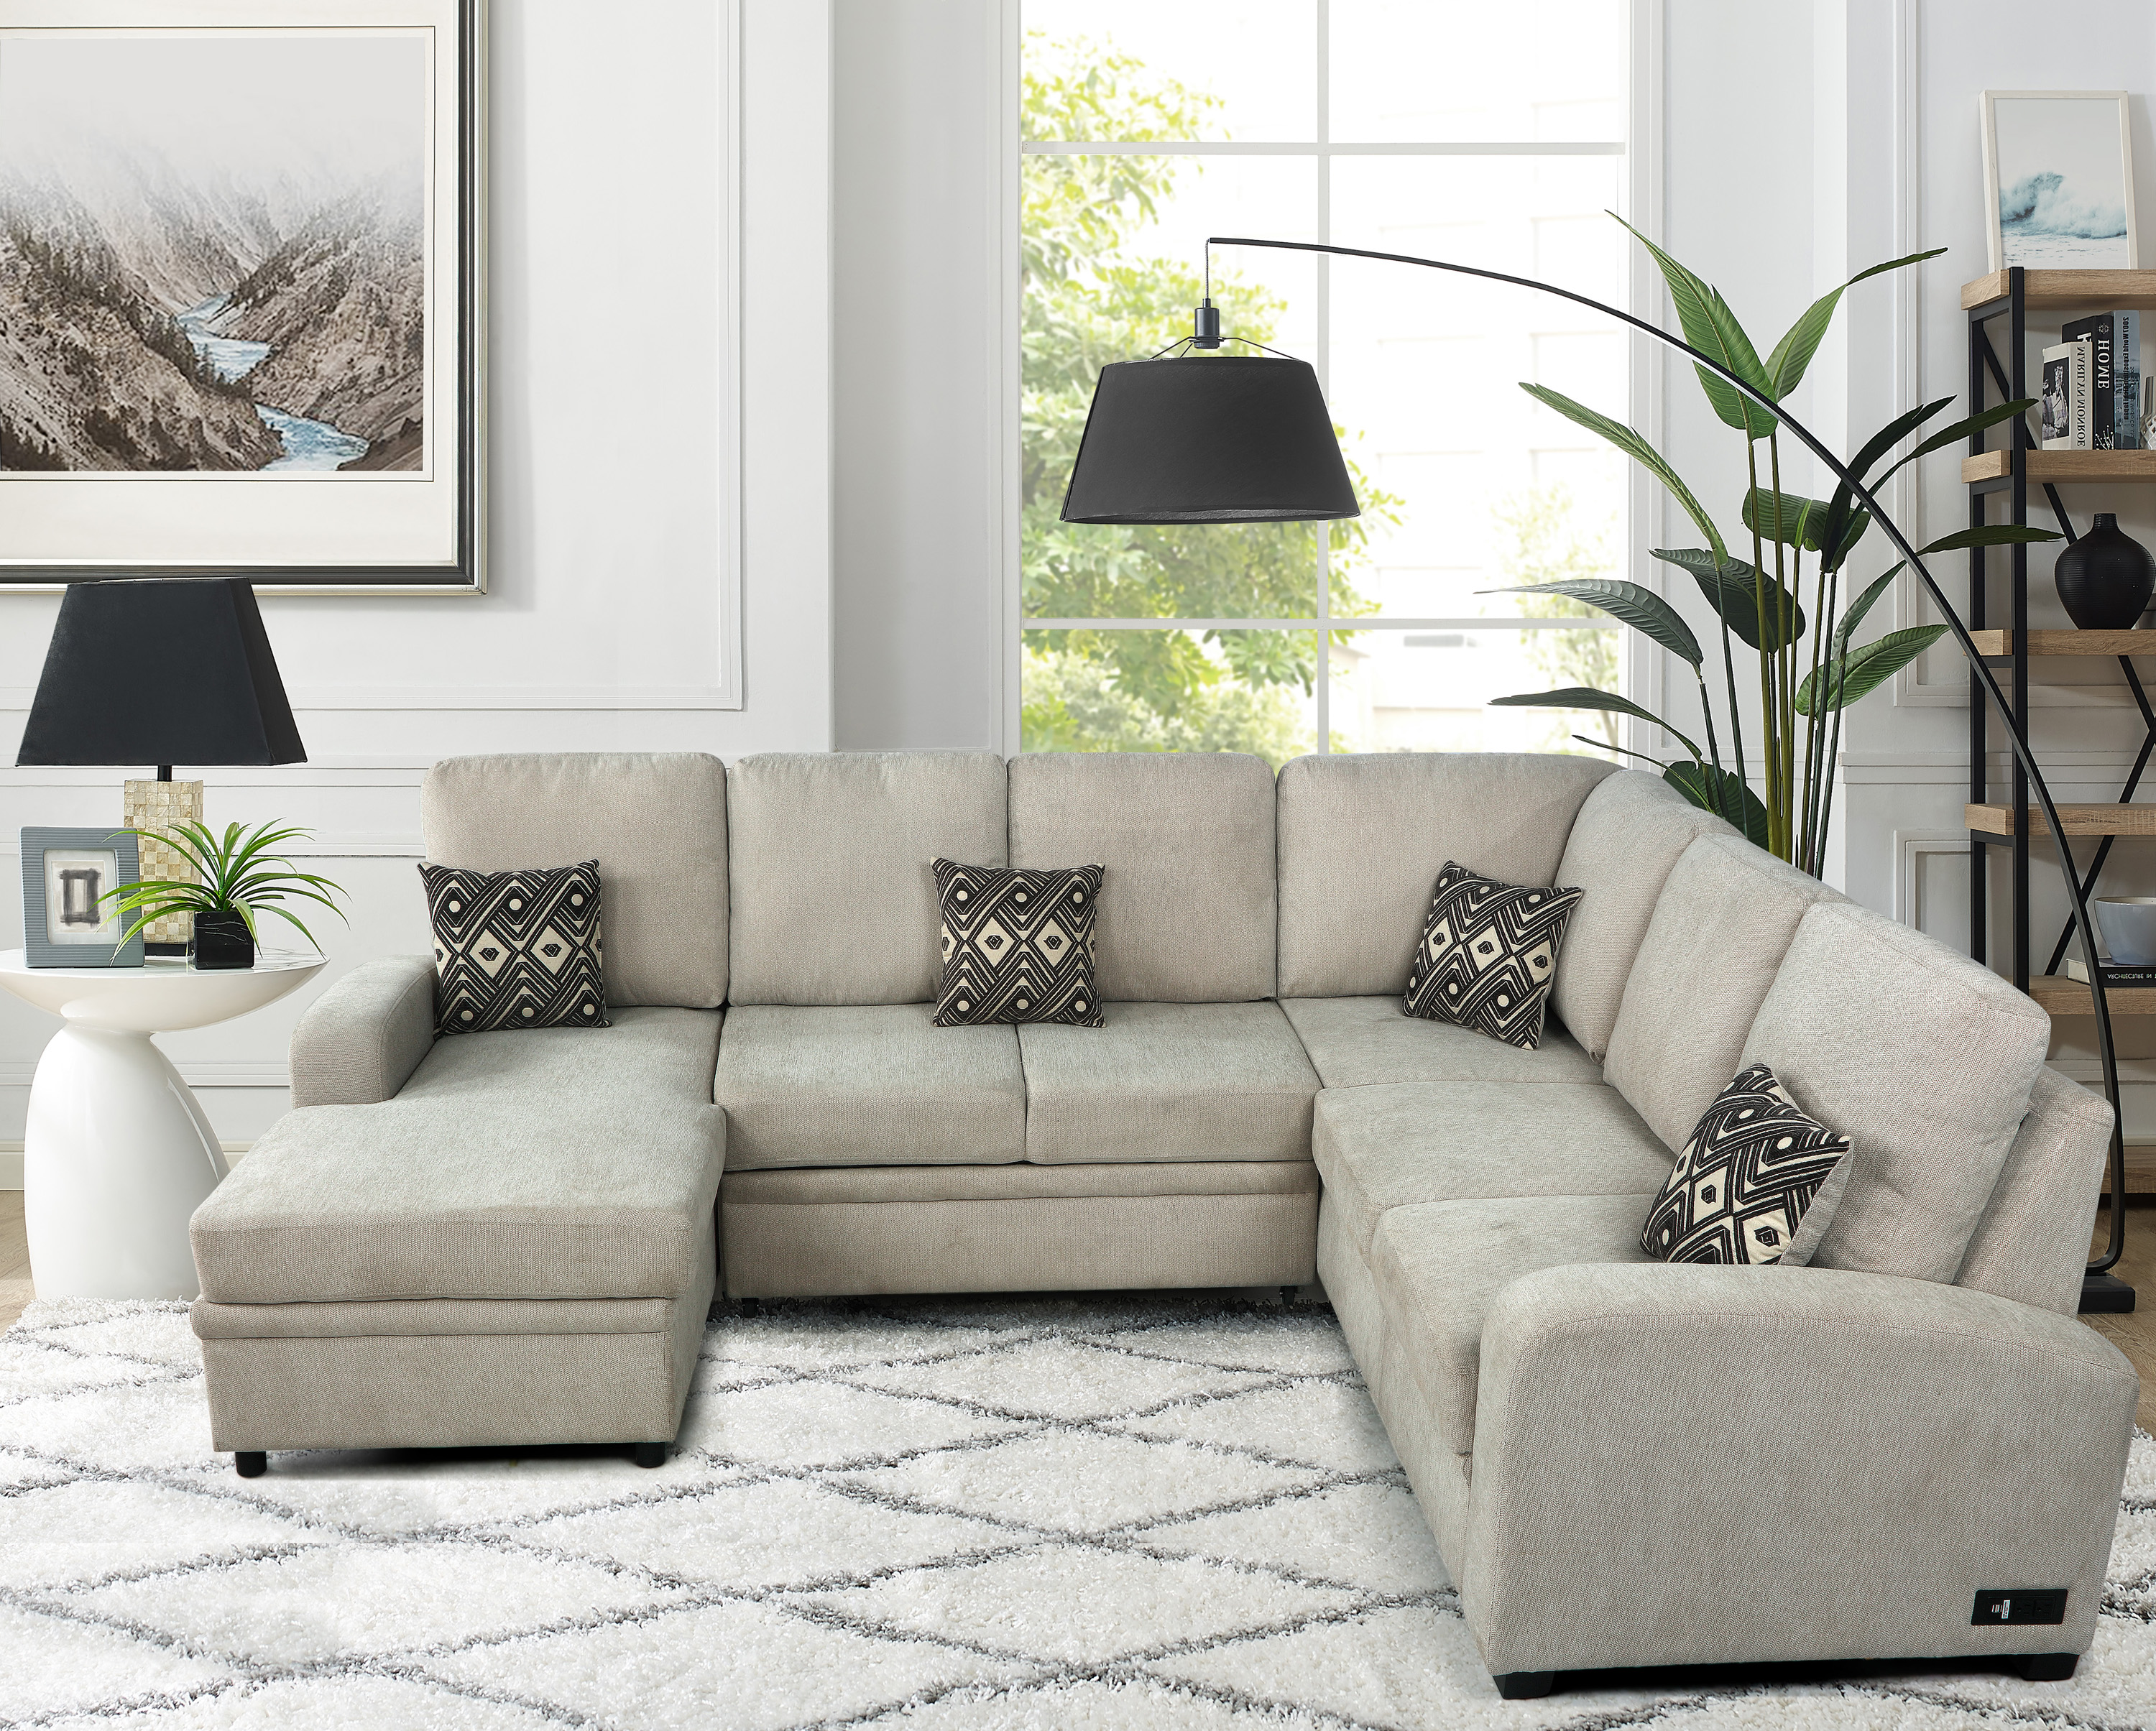 Serta Blair Multifunctional Indoor Sectional Sofa with USB & Power, Beige - image 1 of 11